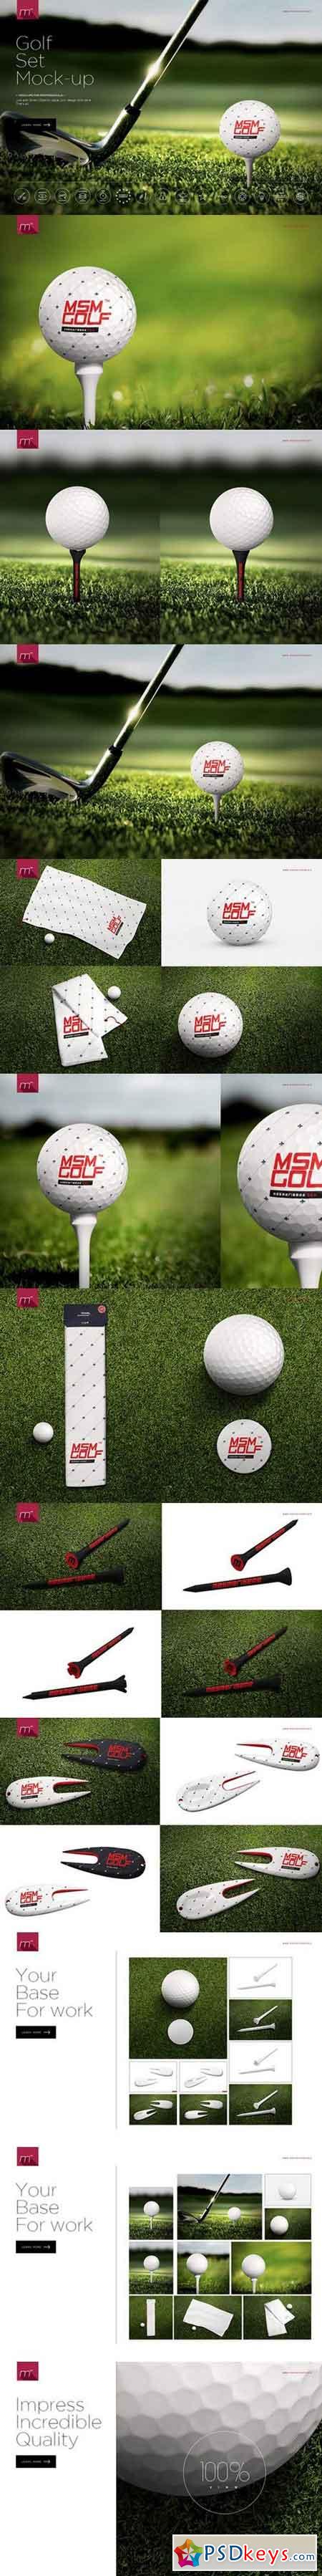 Download Golf Set Mock-up 904494 » Free Download Photoshop Vector ...